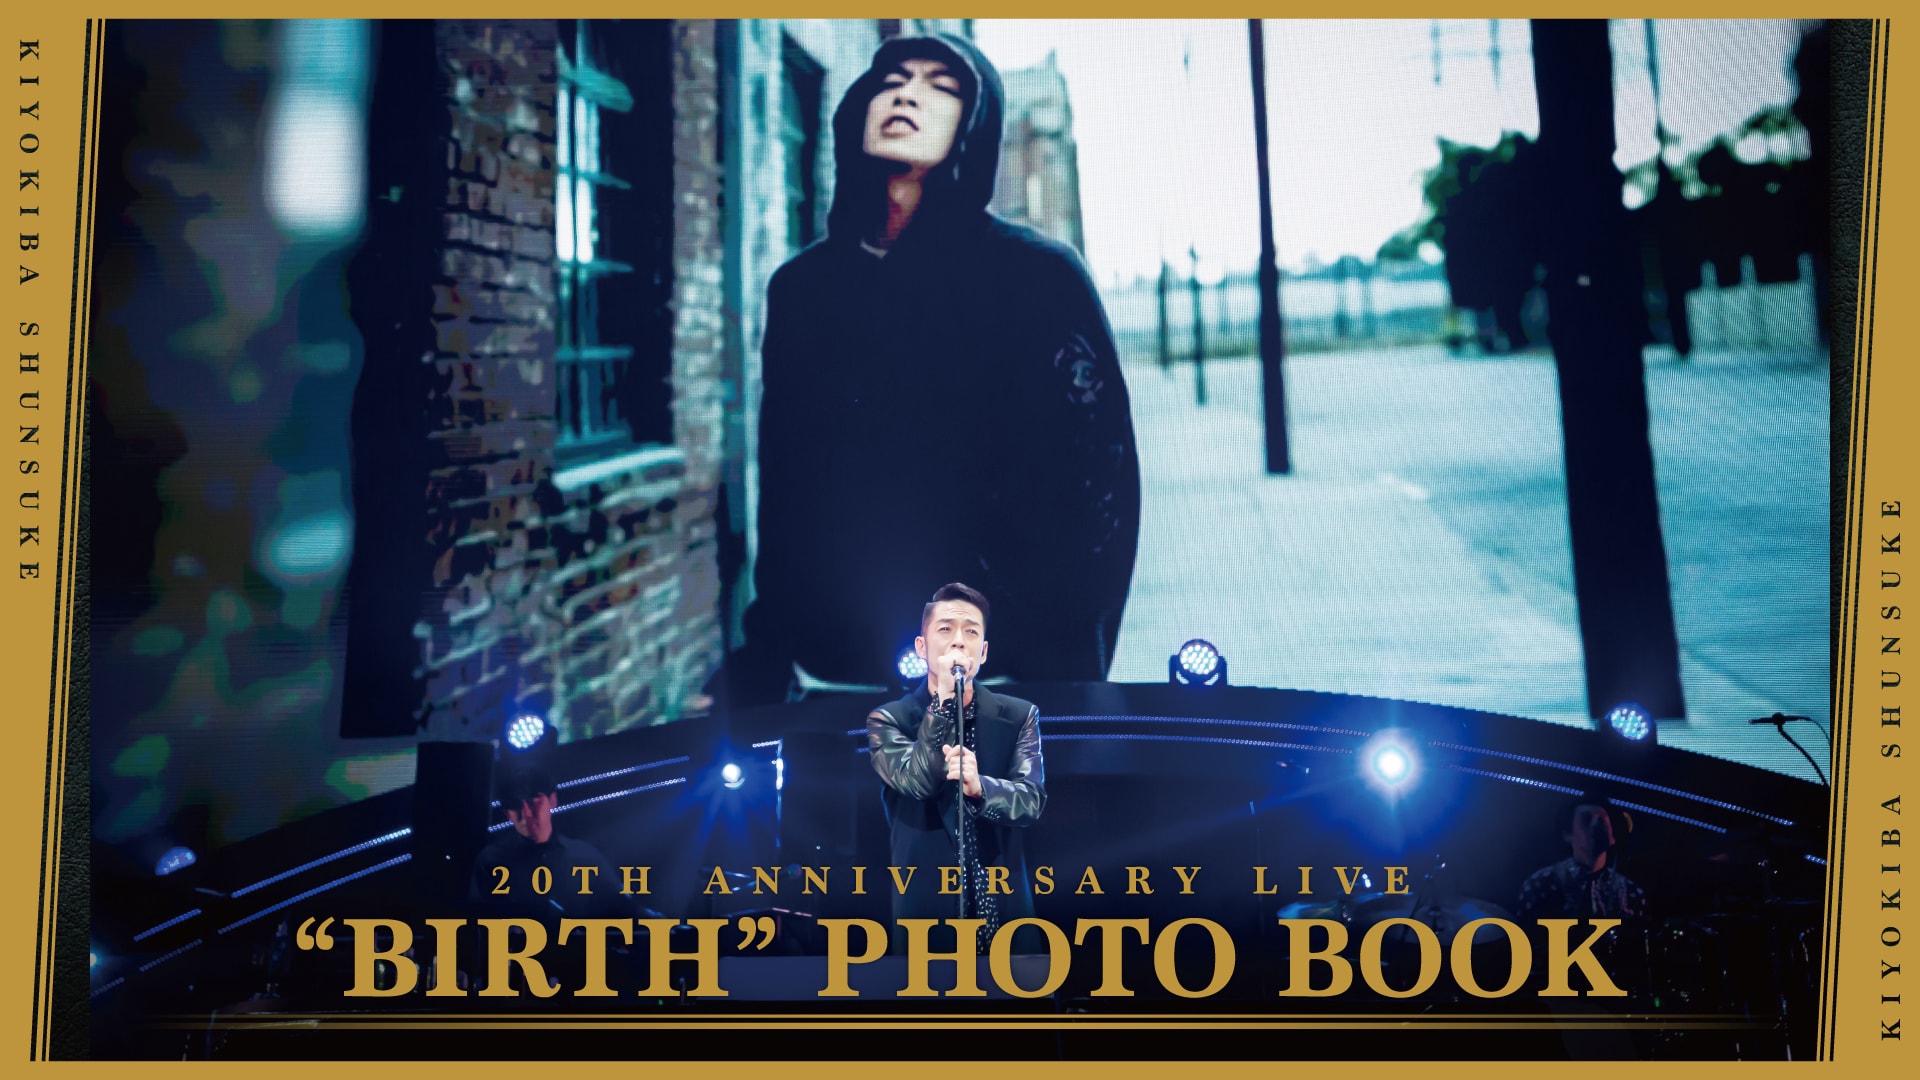 DVD/ブルーレイ清木場俊介BIRTH 20th anniversary LIVE